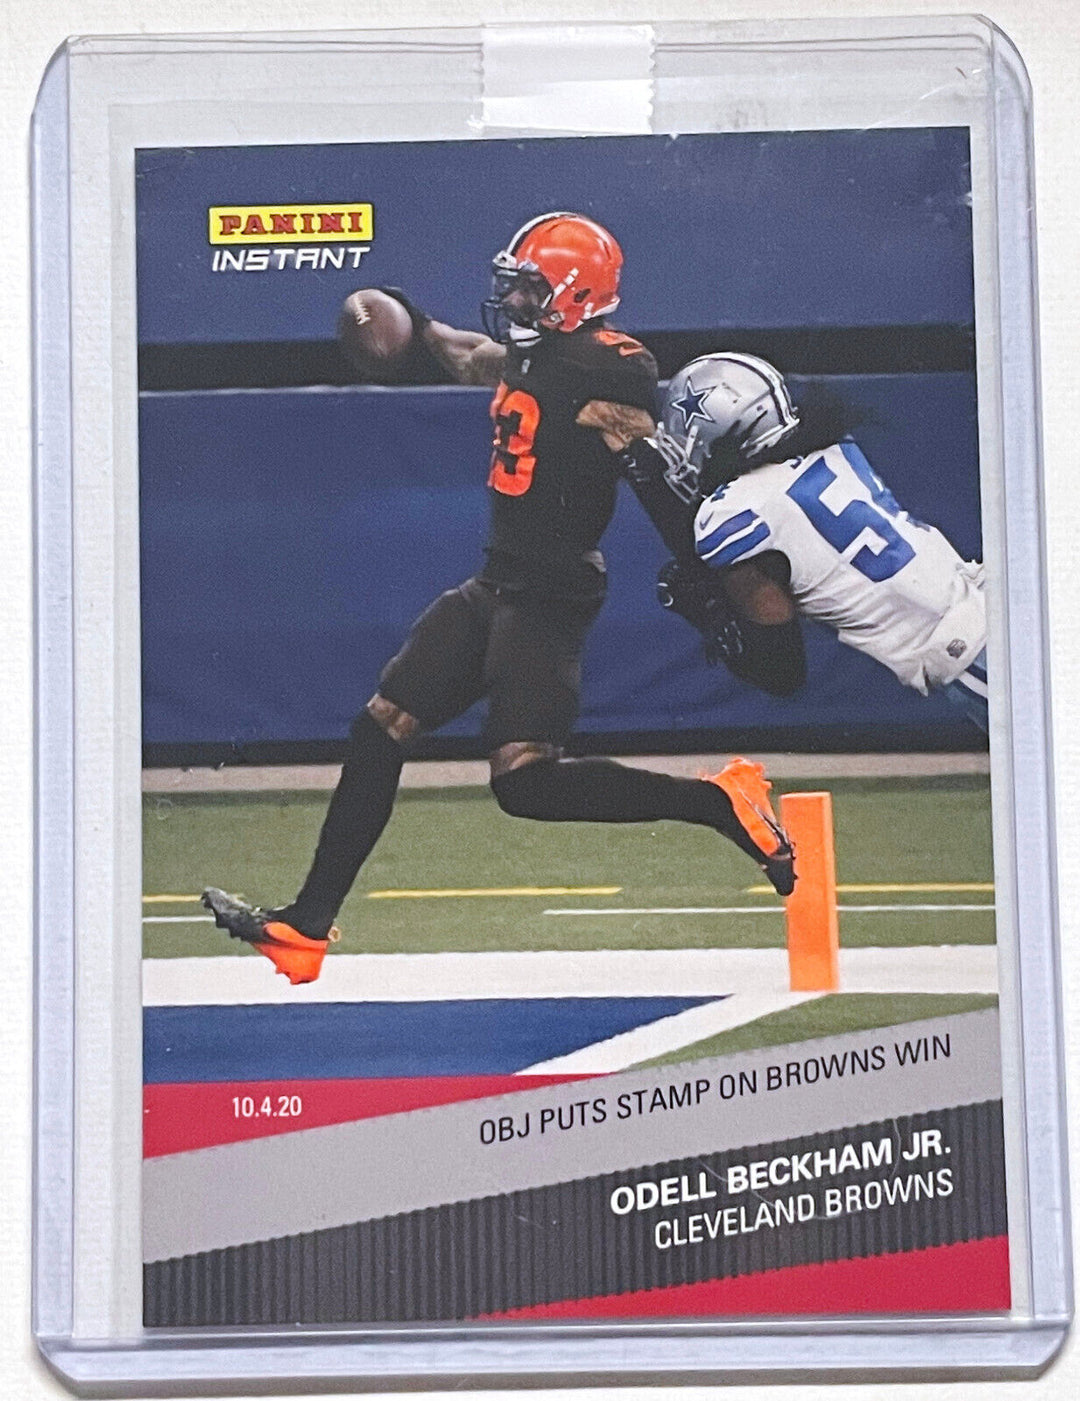 2020 ODELL BECKHAM JR. OBJ PUTS STAMP ON BROWNS WIN PANINI INSTANT NFL CARD #55 Image 1